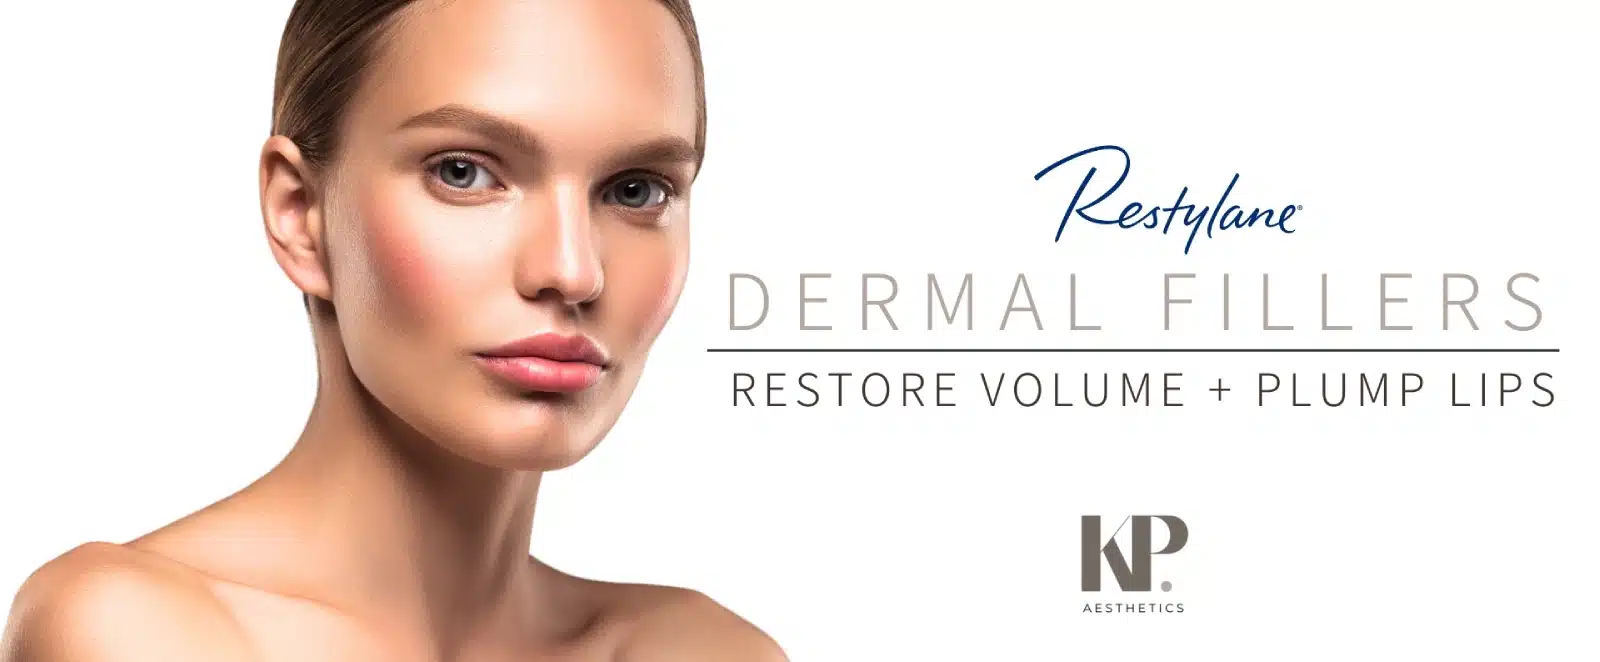 Dermal Fillers - Restore Volume + Plump Lips - KP Aesthetics